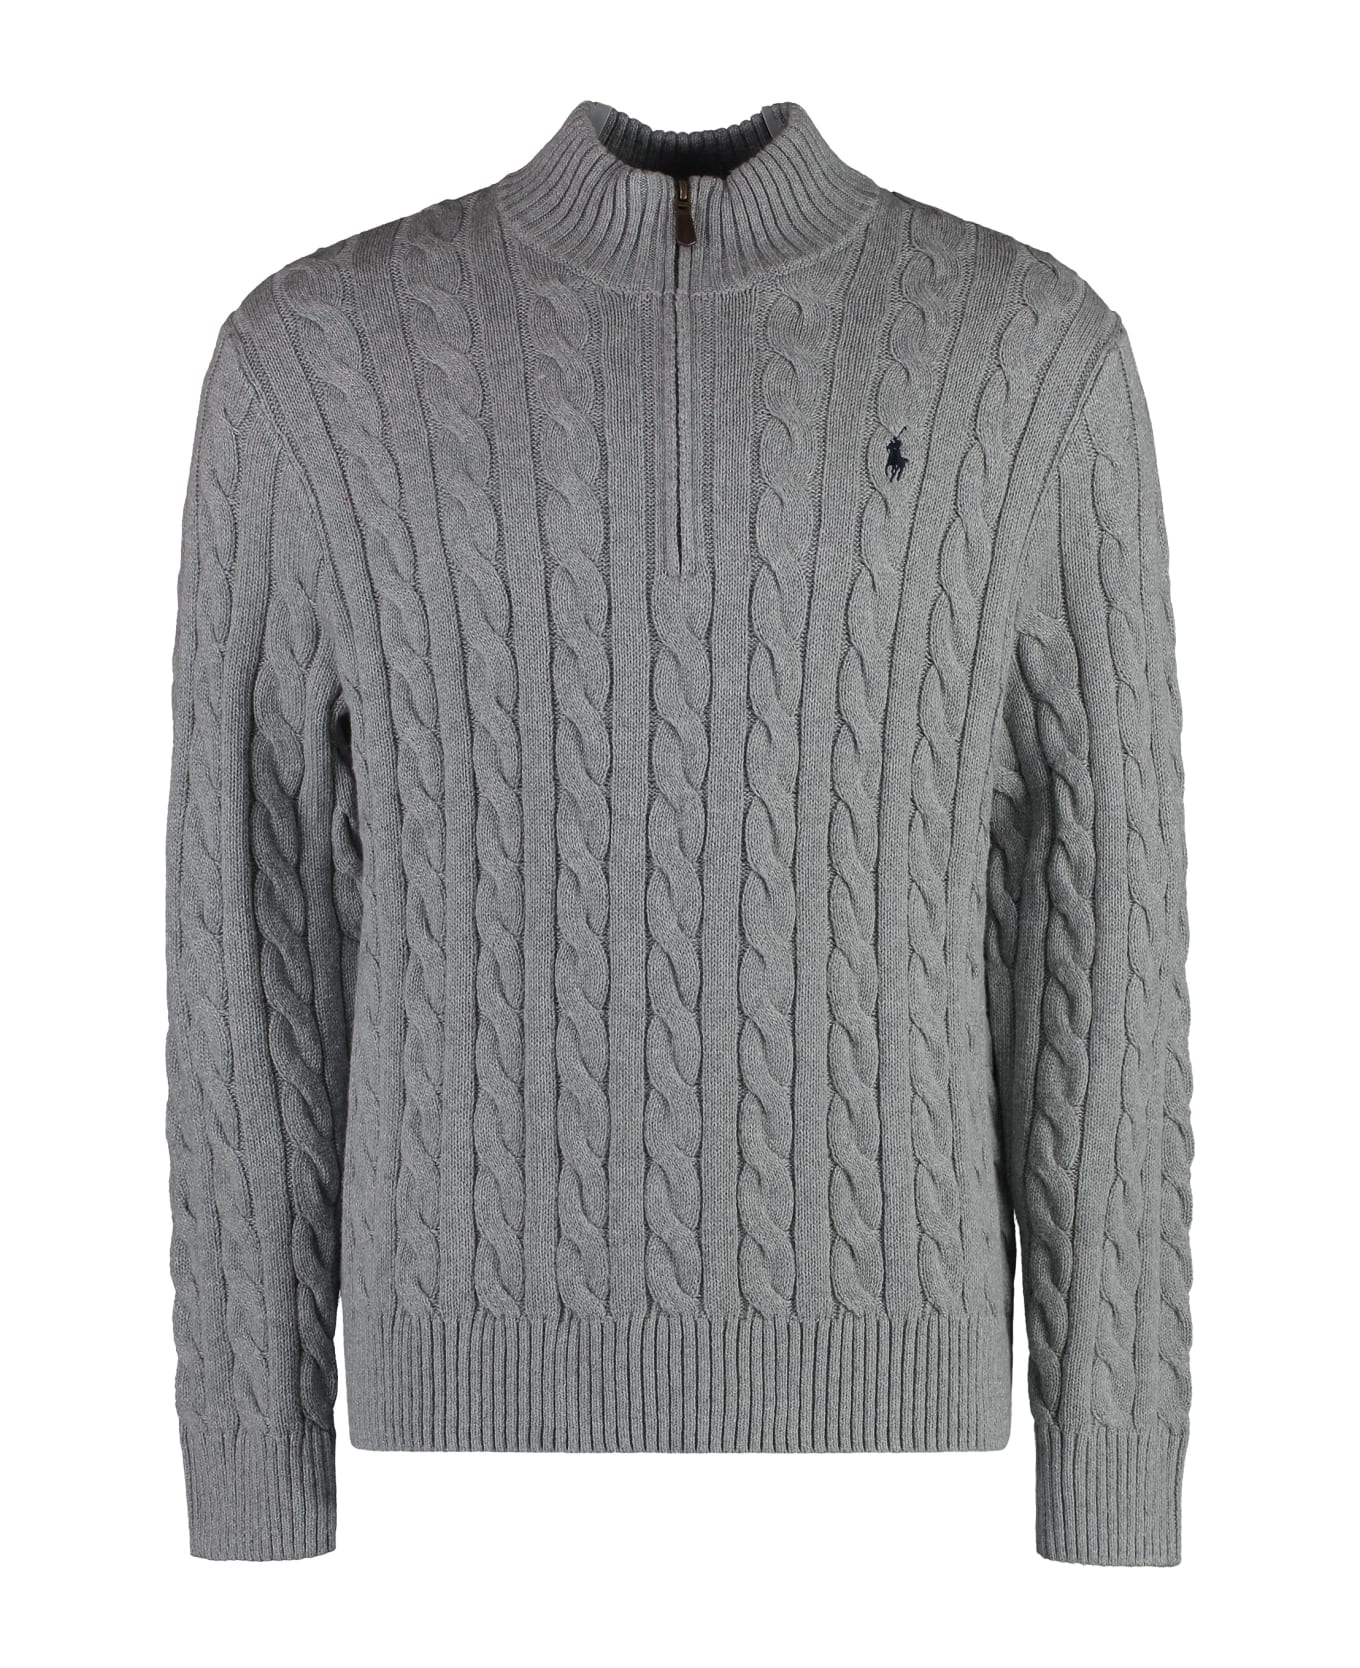 Polo Ralph Lauren Cotton Turtleneck Sweater - grey